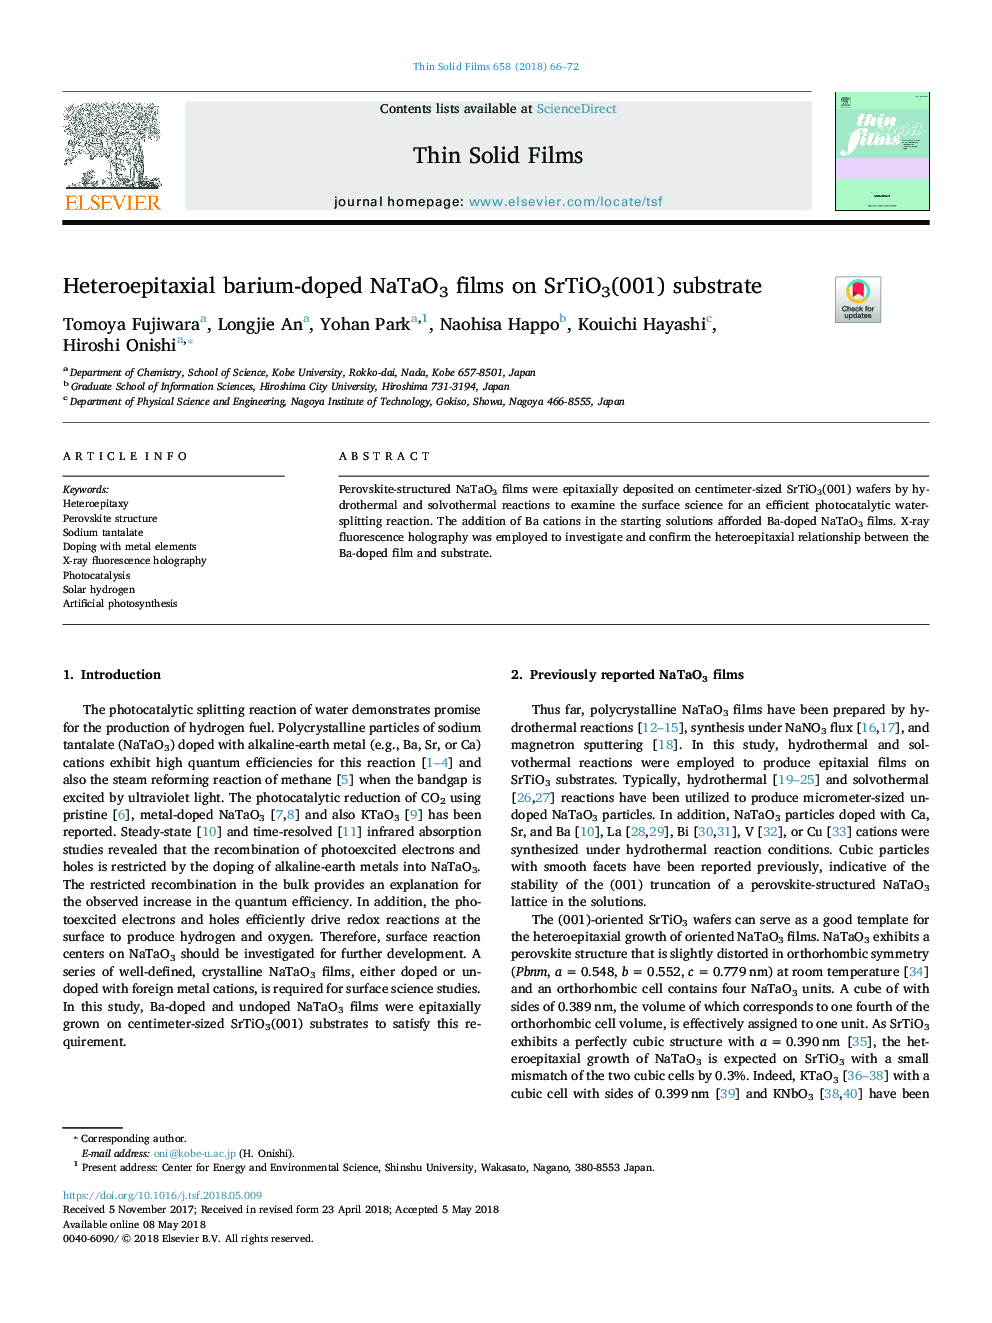 Heteroepitaxial barium-doped NaTaO3 films on SrTiO3(001) substrate